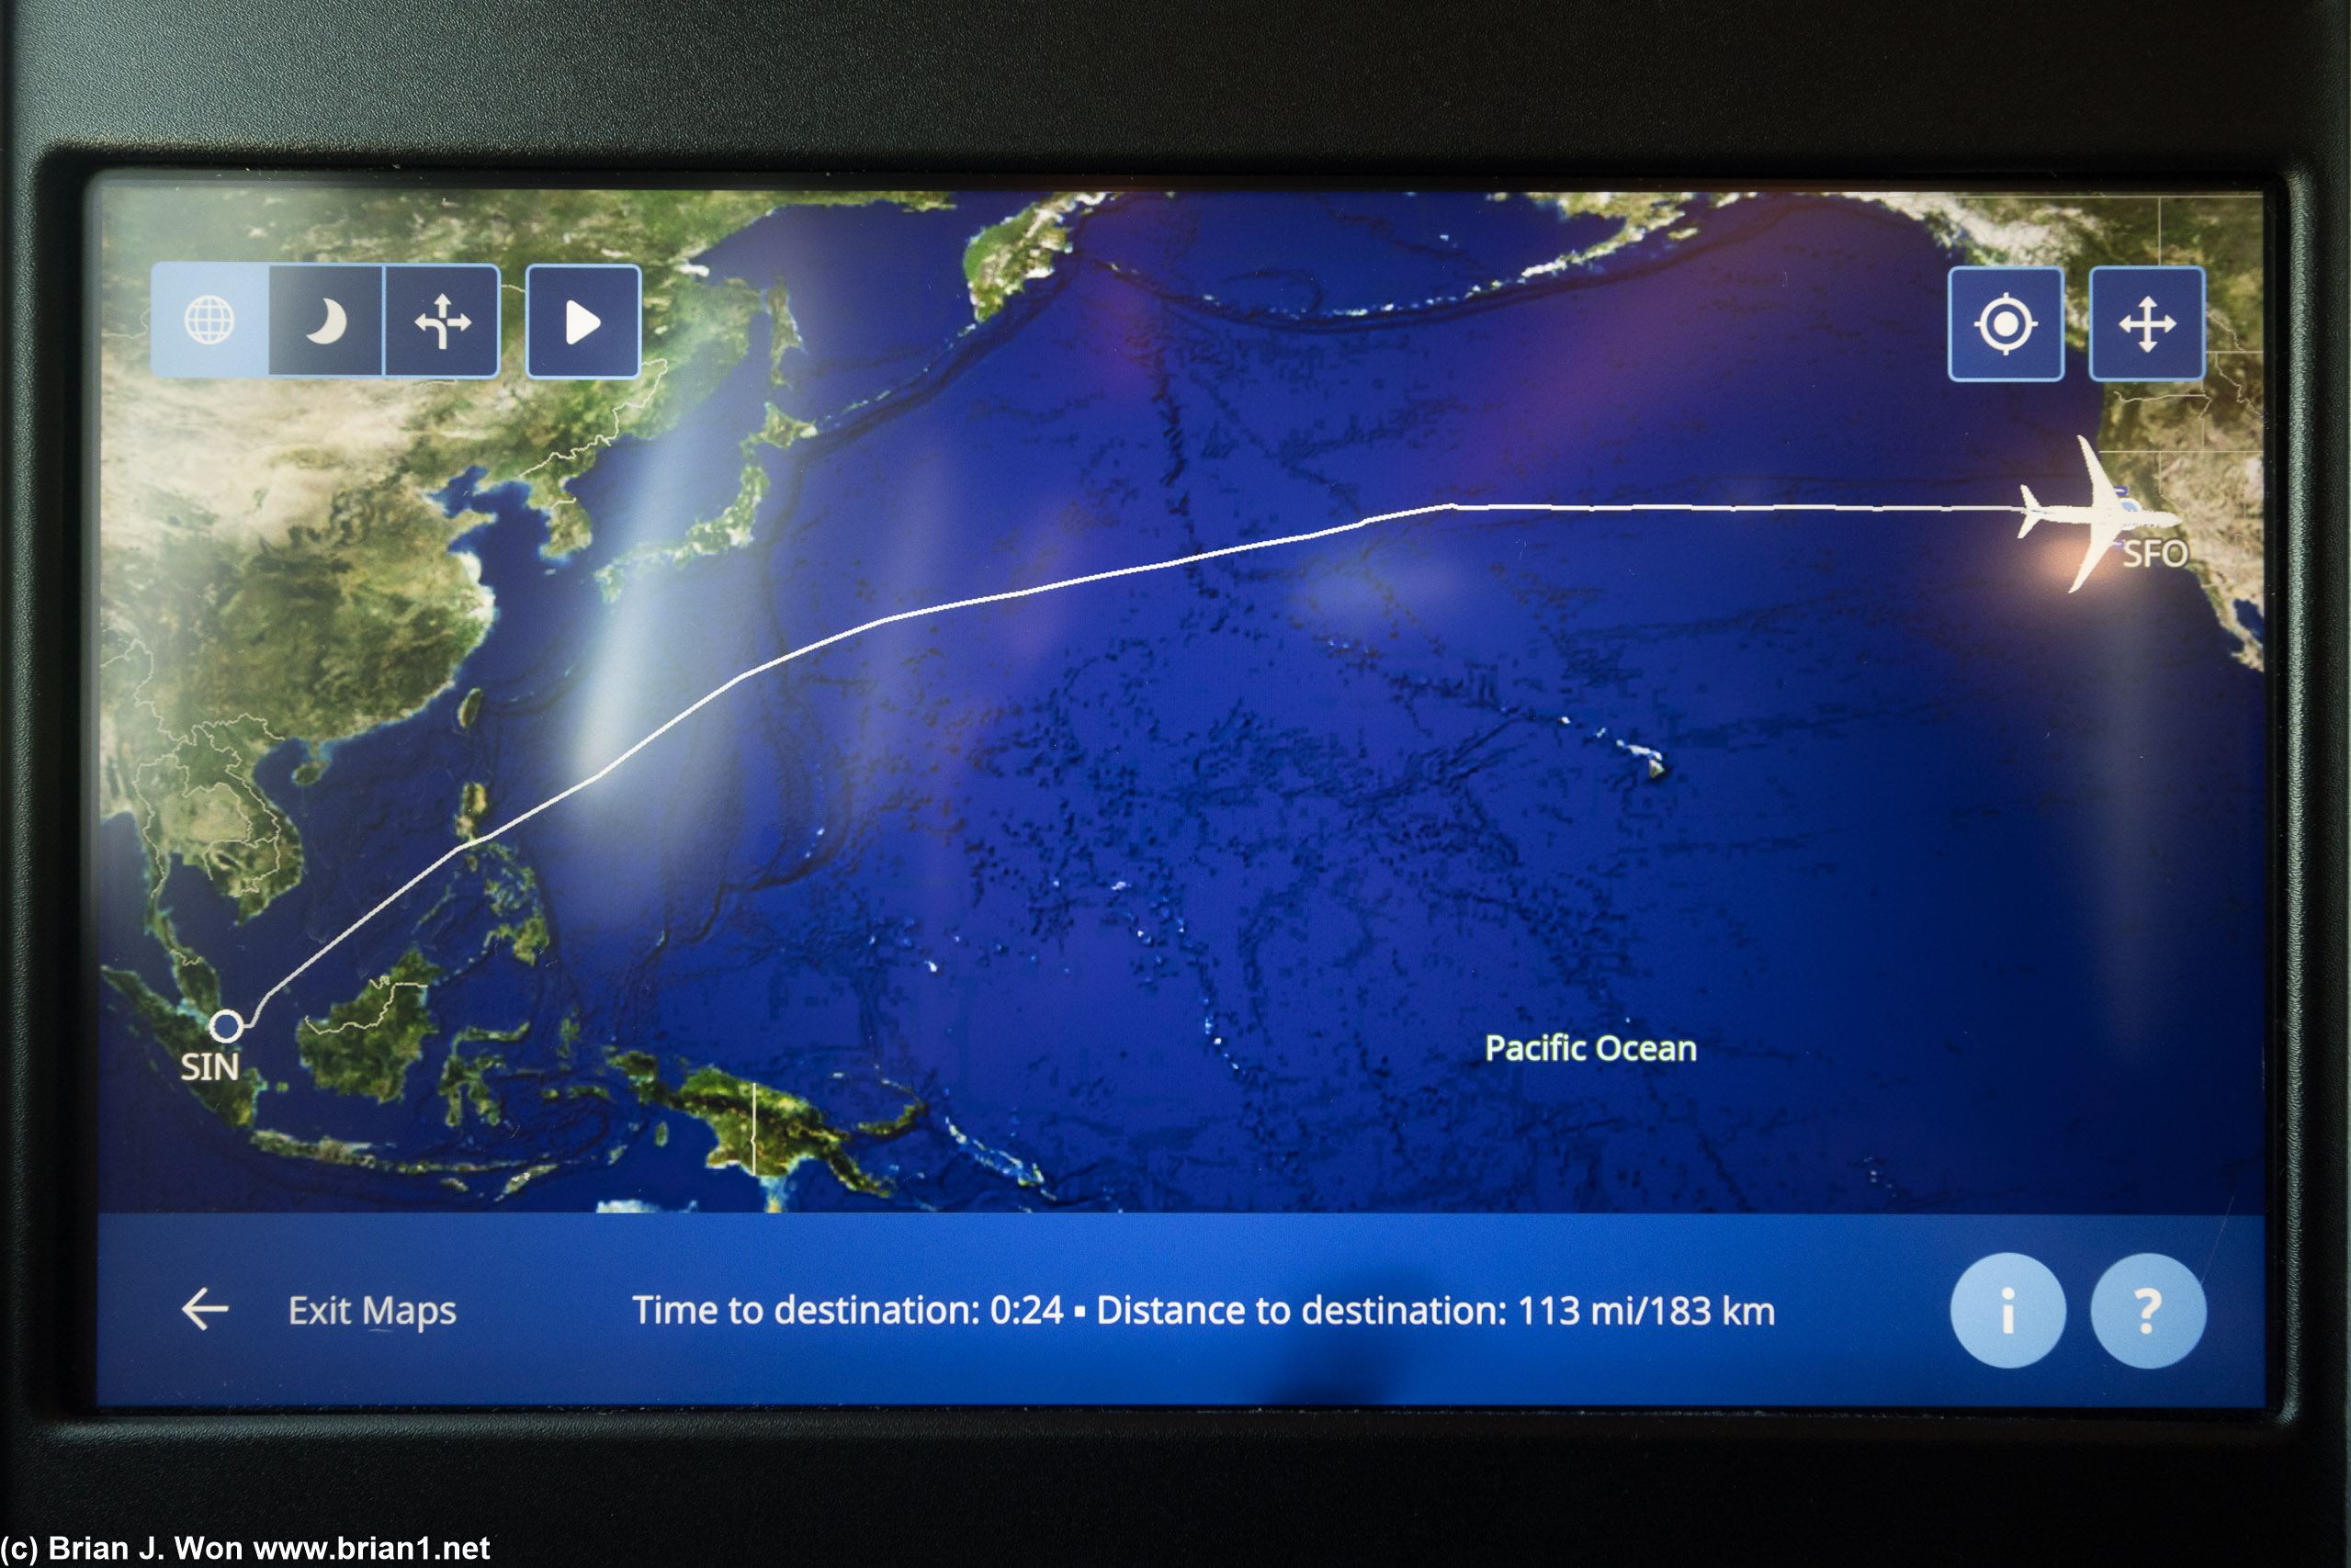 8,476 miles flown per in-flight map, 8,642 miles per Flightaware.